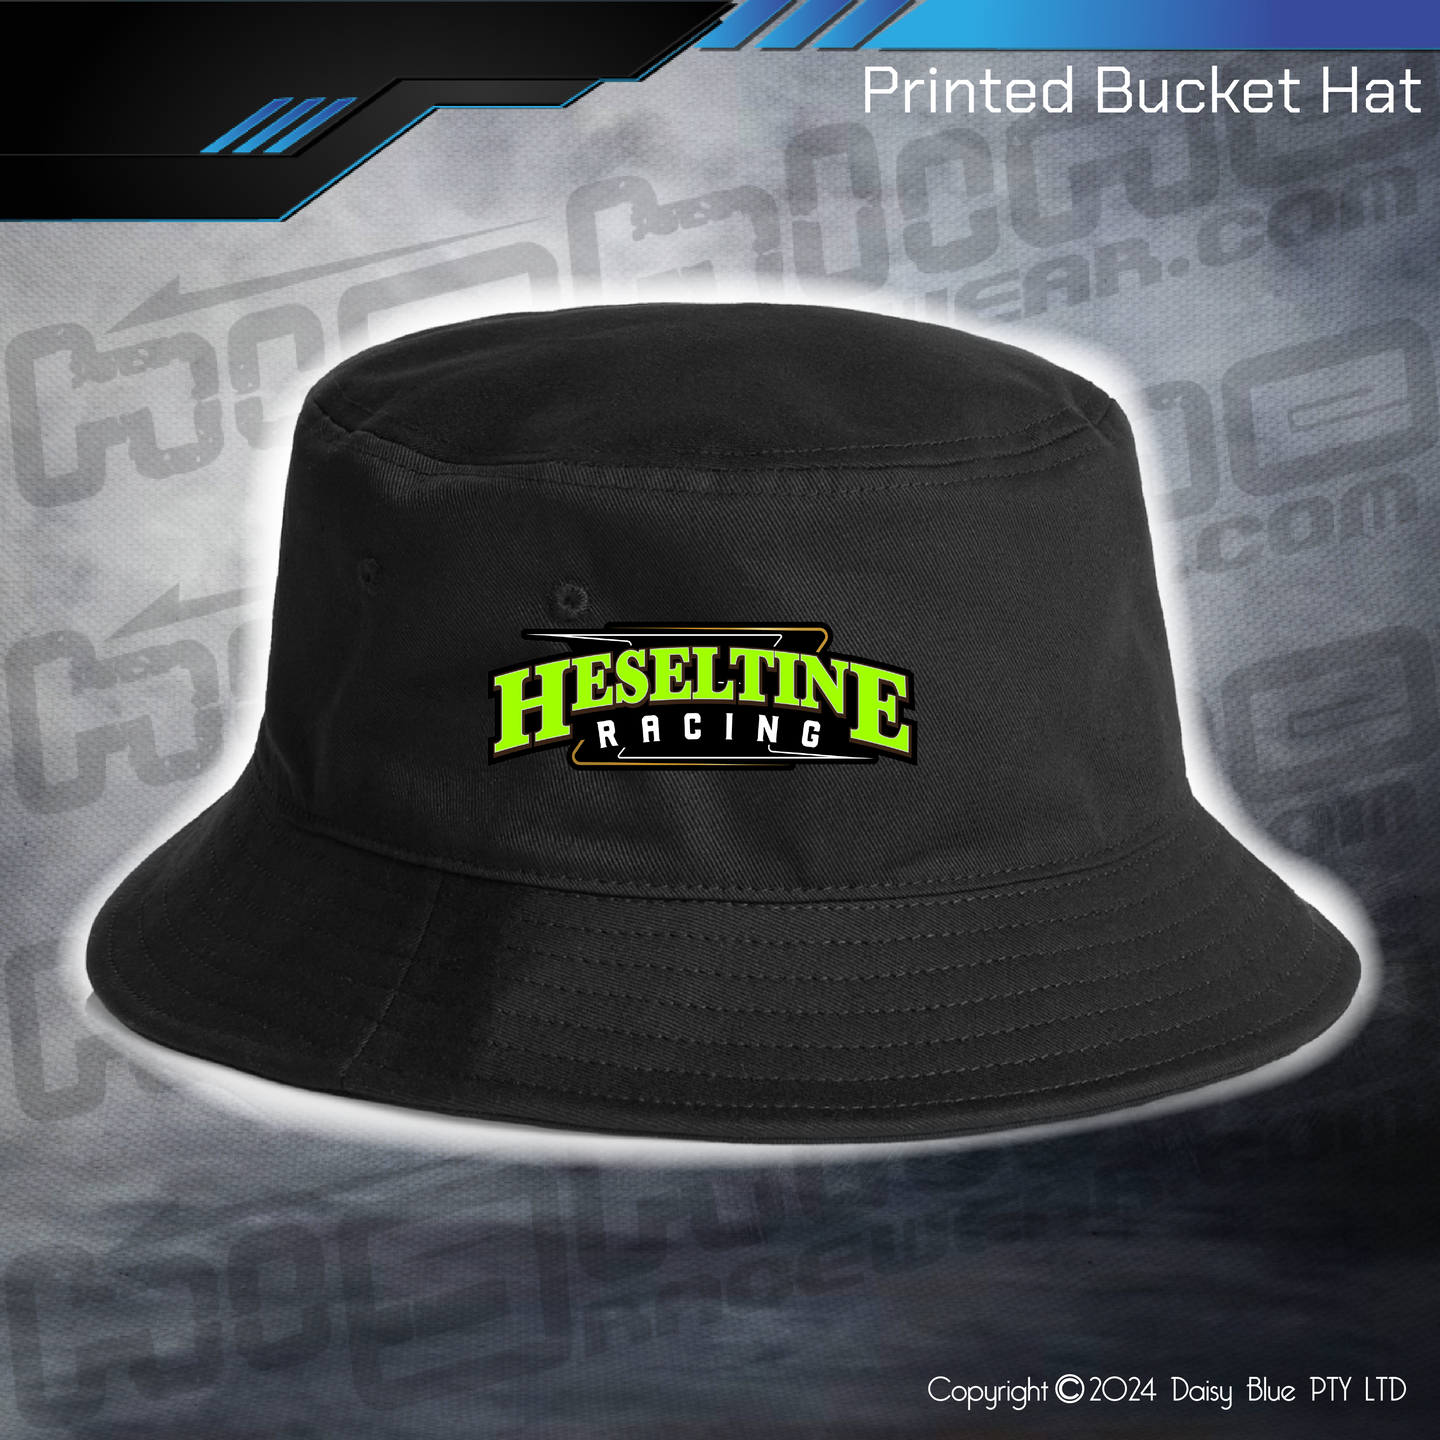 Printed Bucket Hat - Dean Heseltine